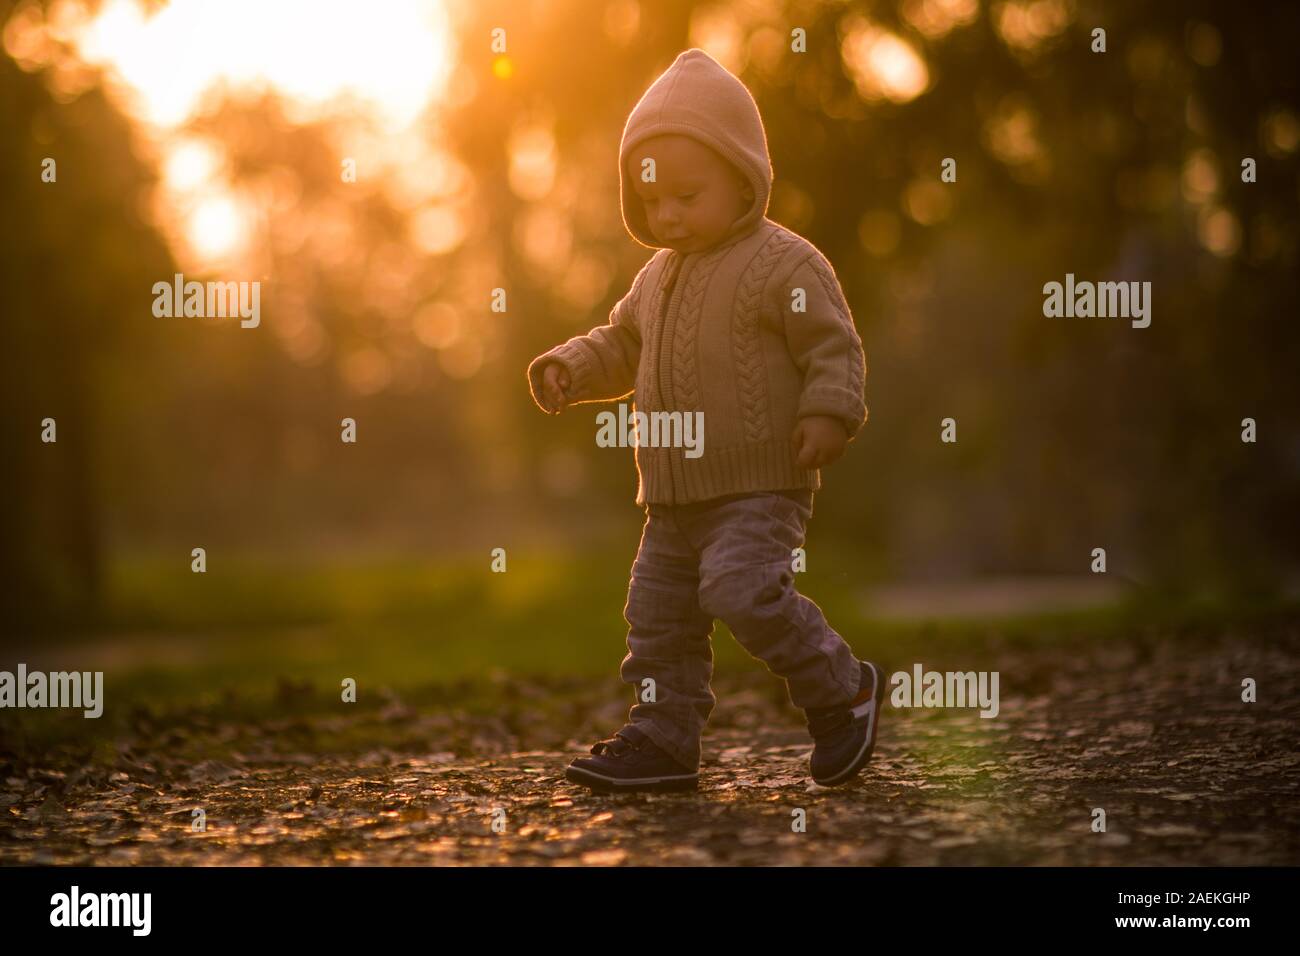 Toddler walking, autumn, sunset Stock Photo